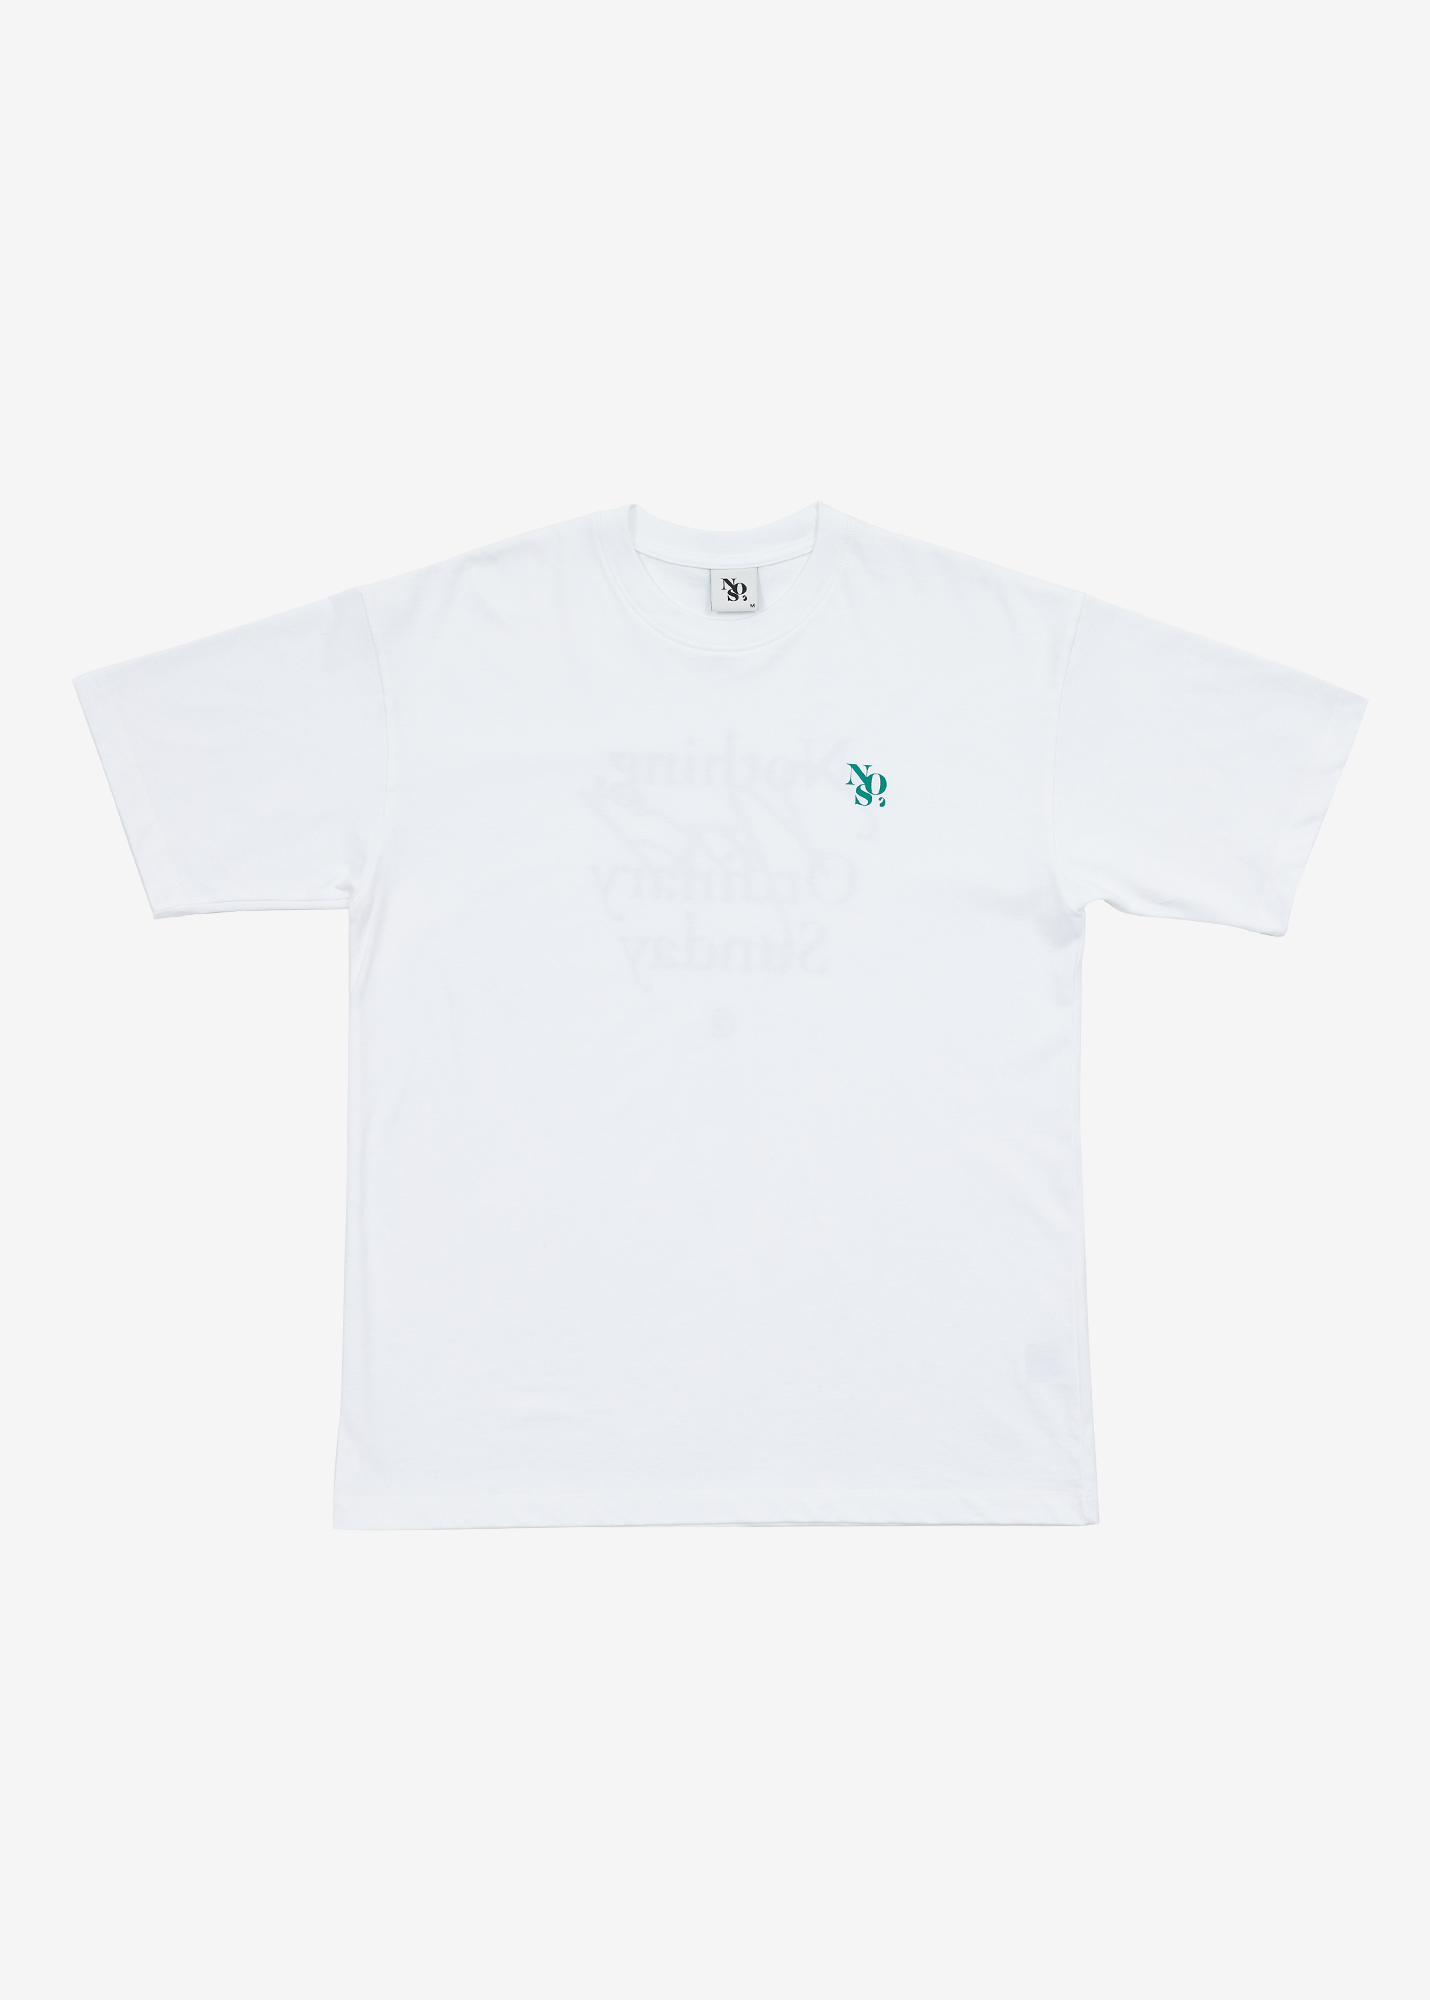 NOS7 Cursive Graphic T-shirt - White